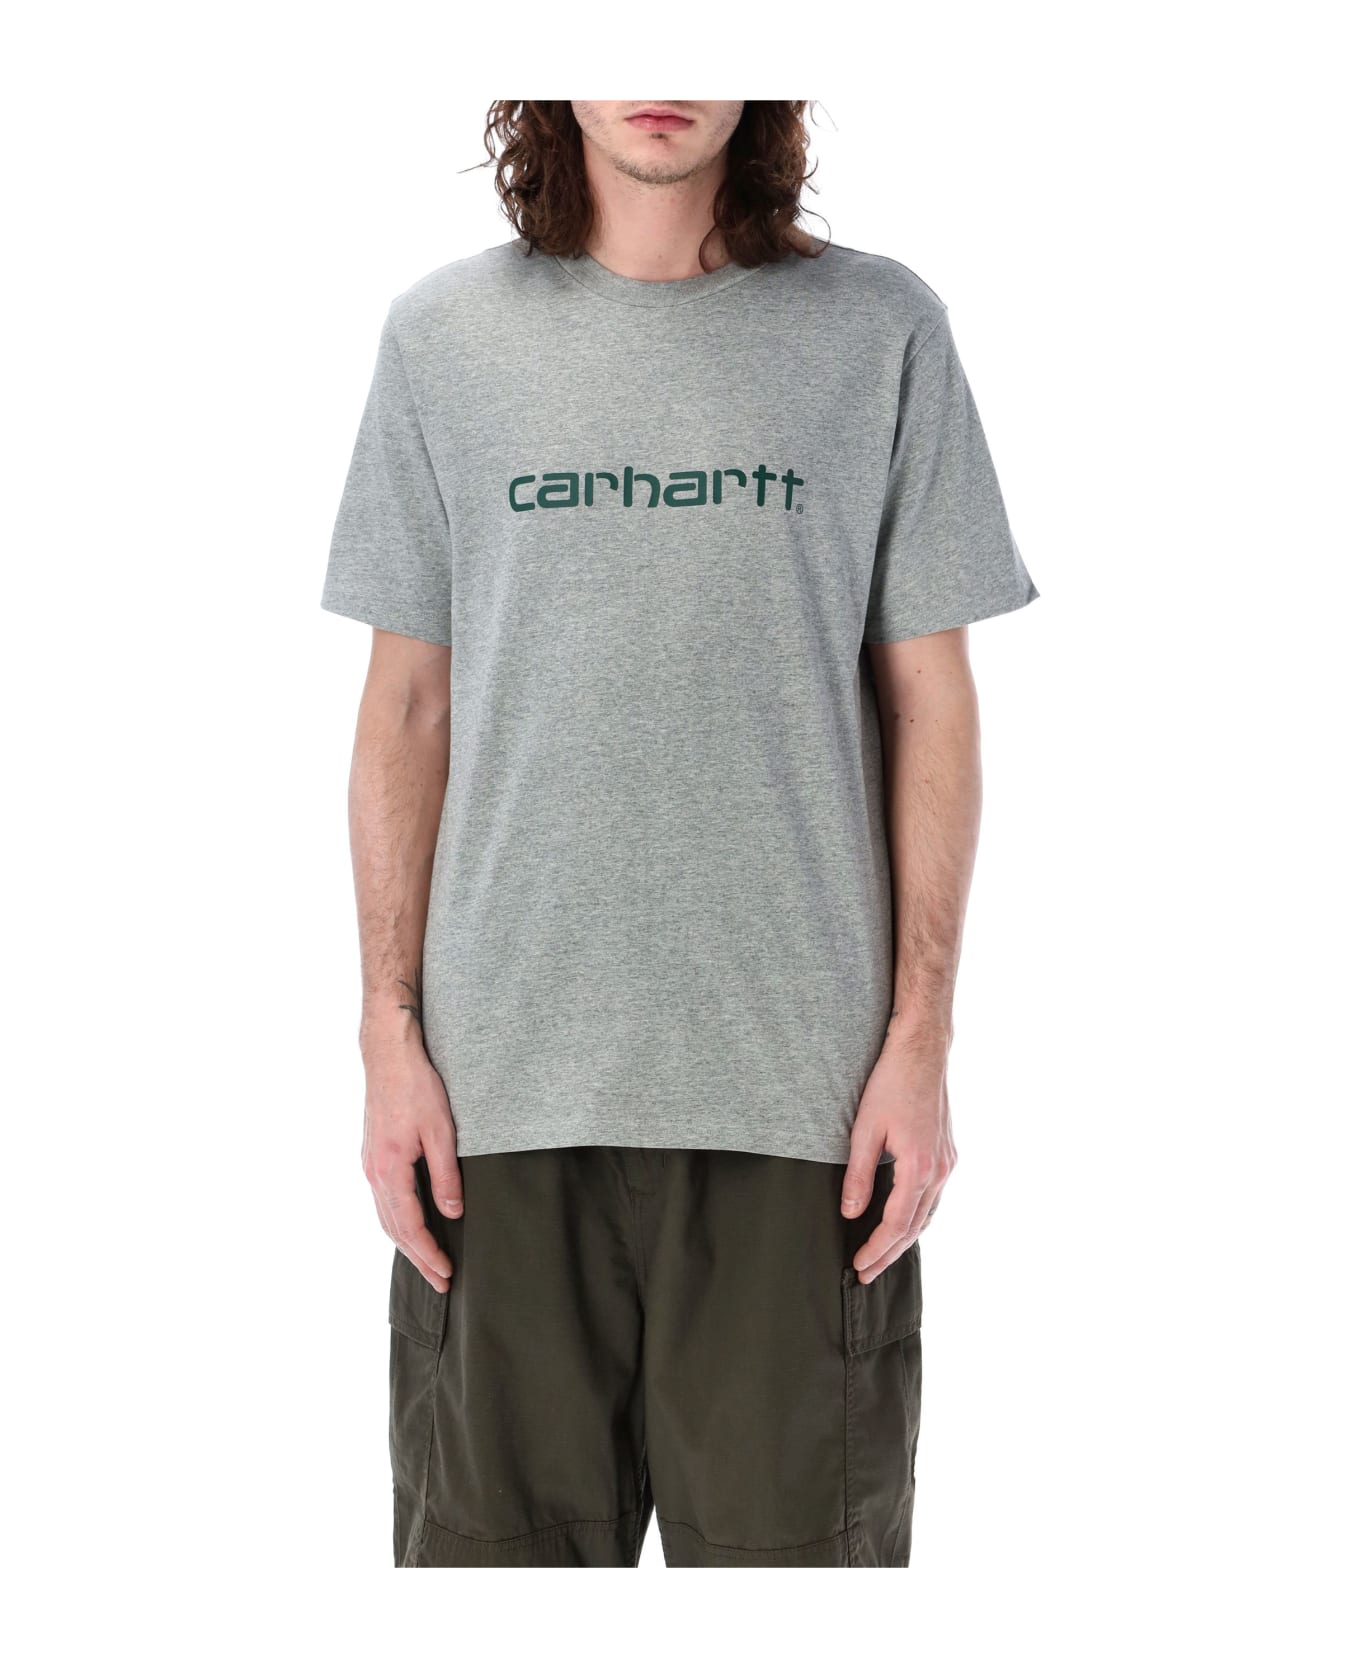 Carhartt Logo T-shirt - GREY HEATHER